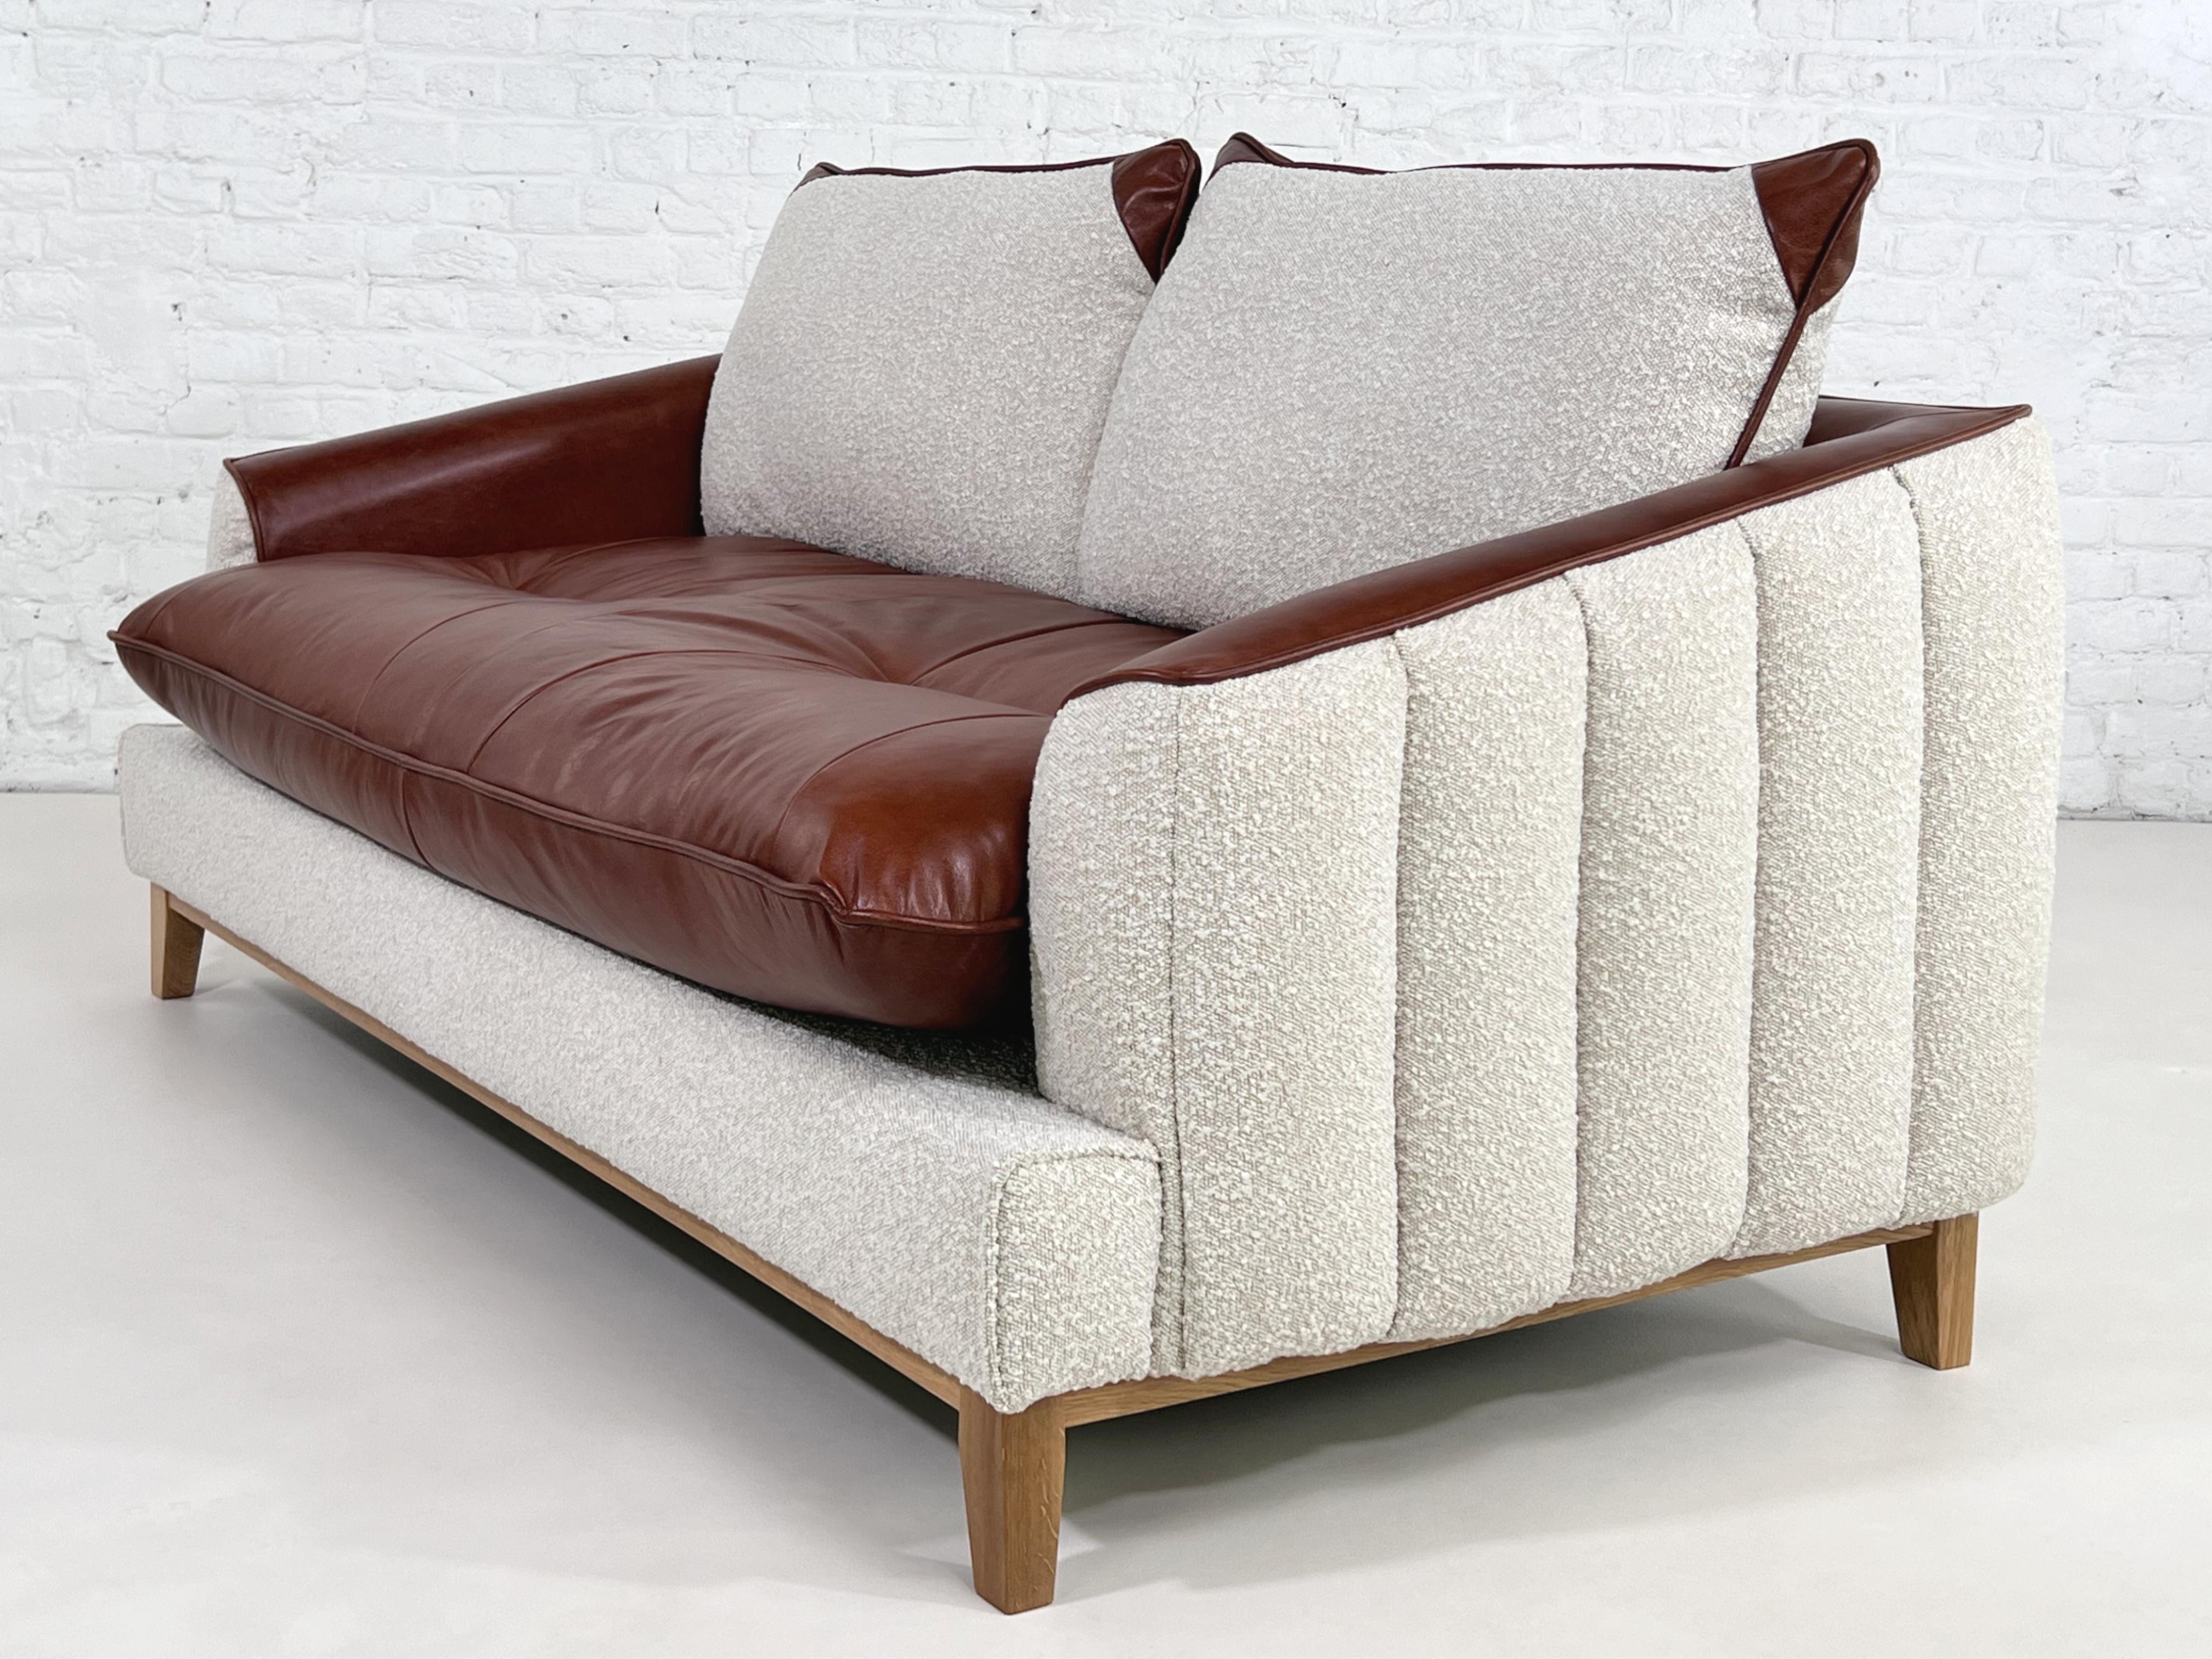 European Mcm and Scandinavian Design Style Cognac Leather and Beige Bouclé Fabric Sofa For Sale